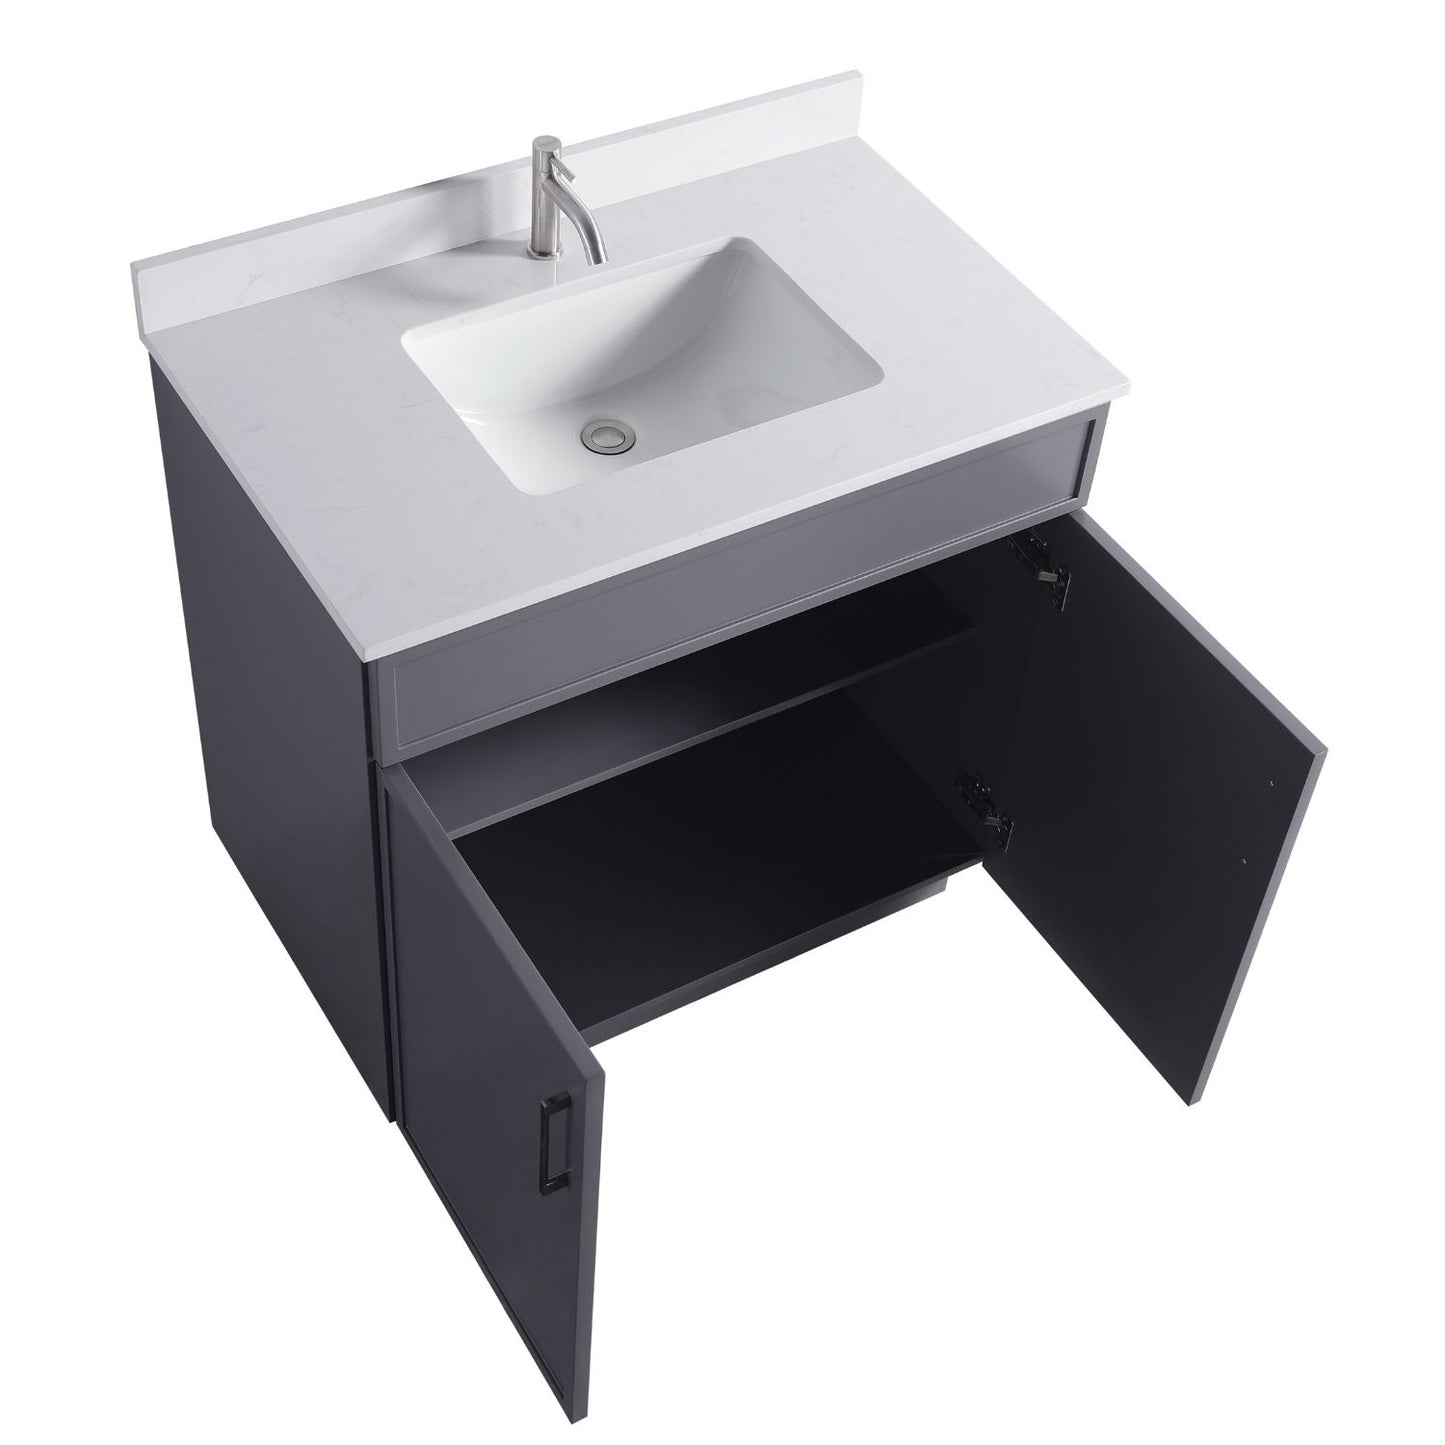 Waterpar® 36 in. L x 22 in. W x 35 in. H Minimalist Bathroom Cabinet with Single Ceramic Sink